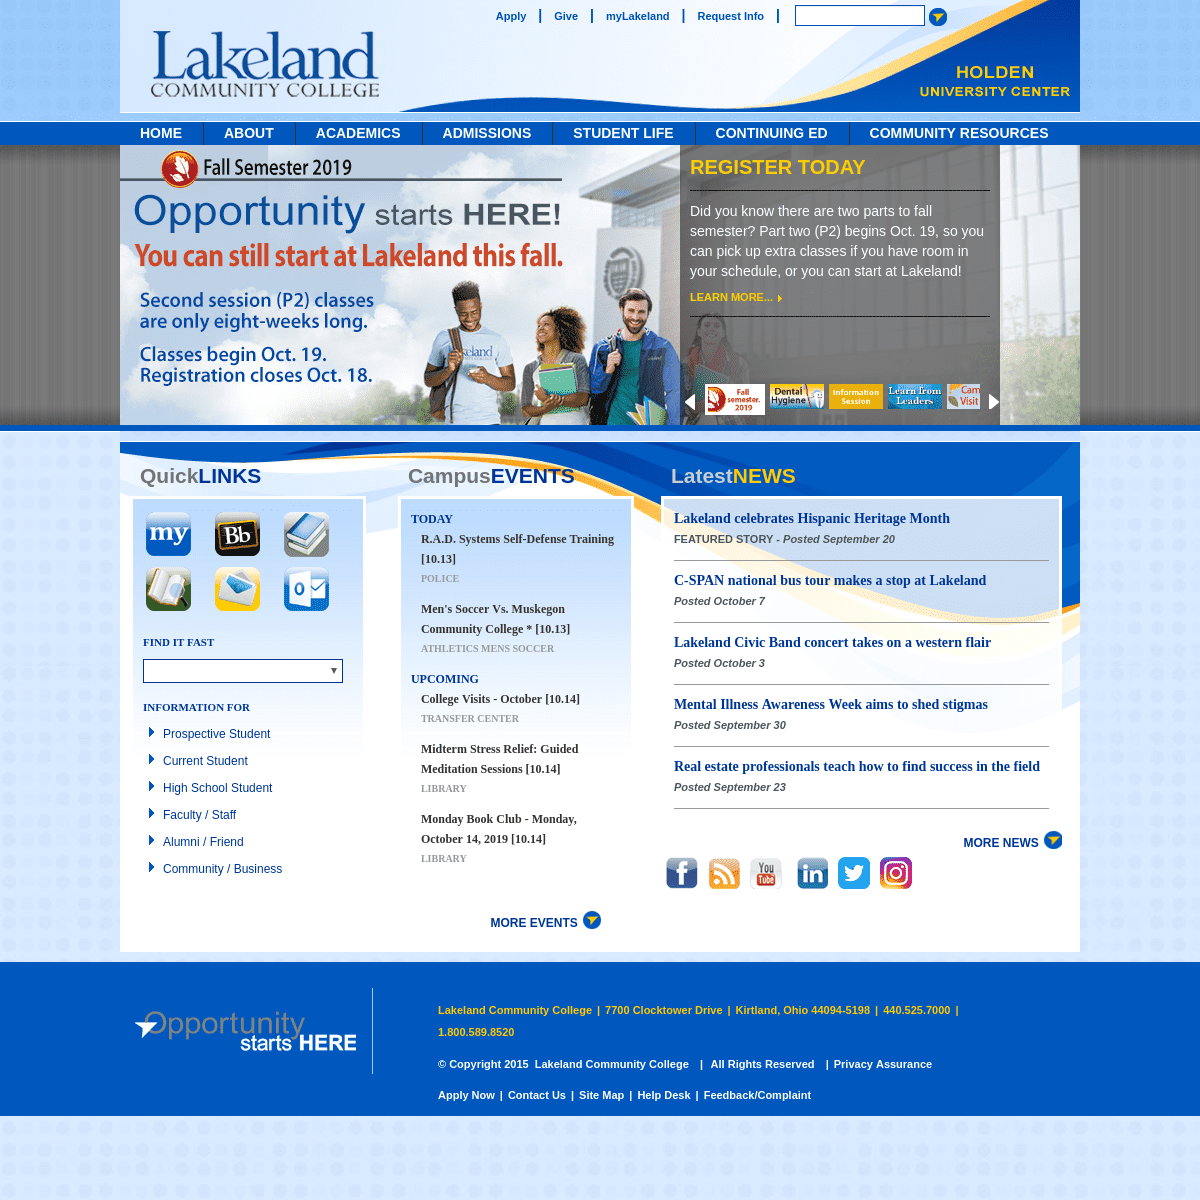 A complete backup of lakelandcc.edu